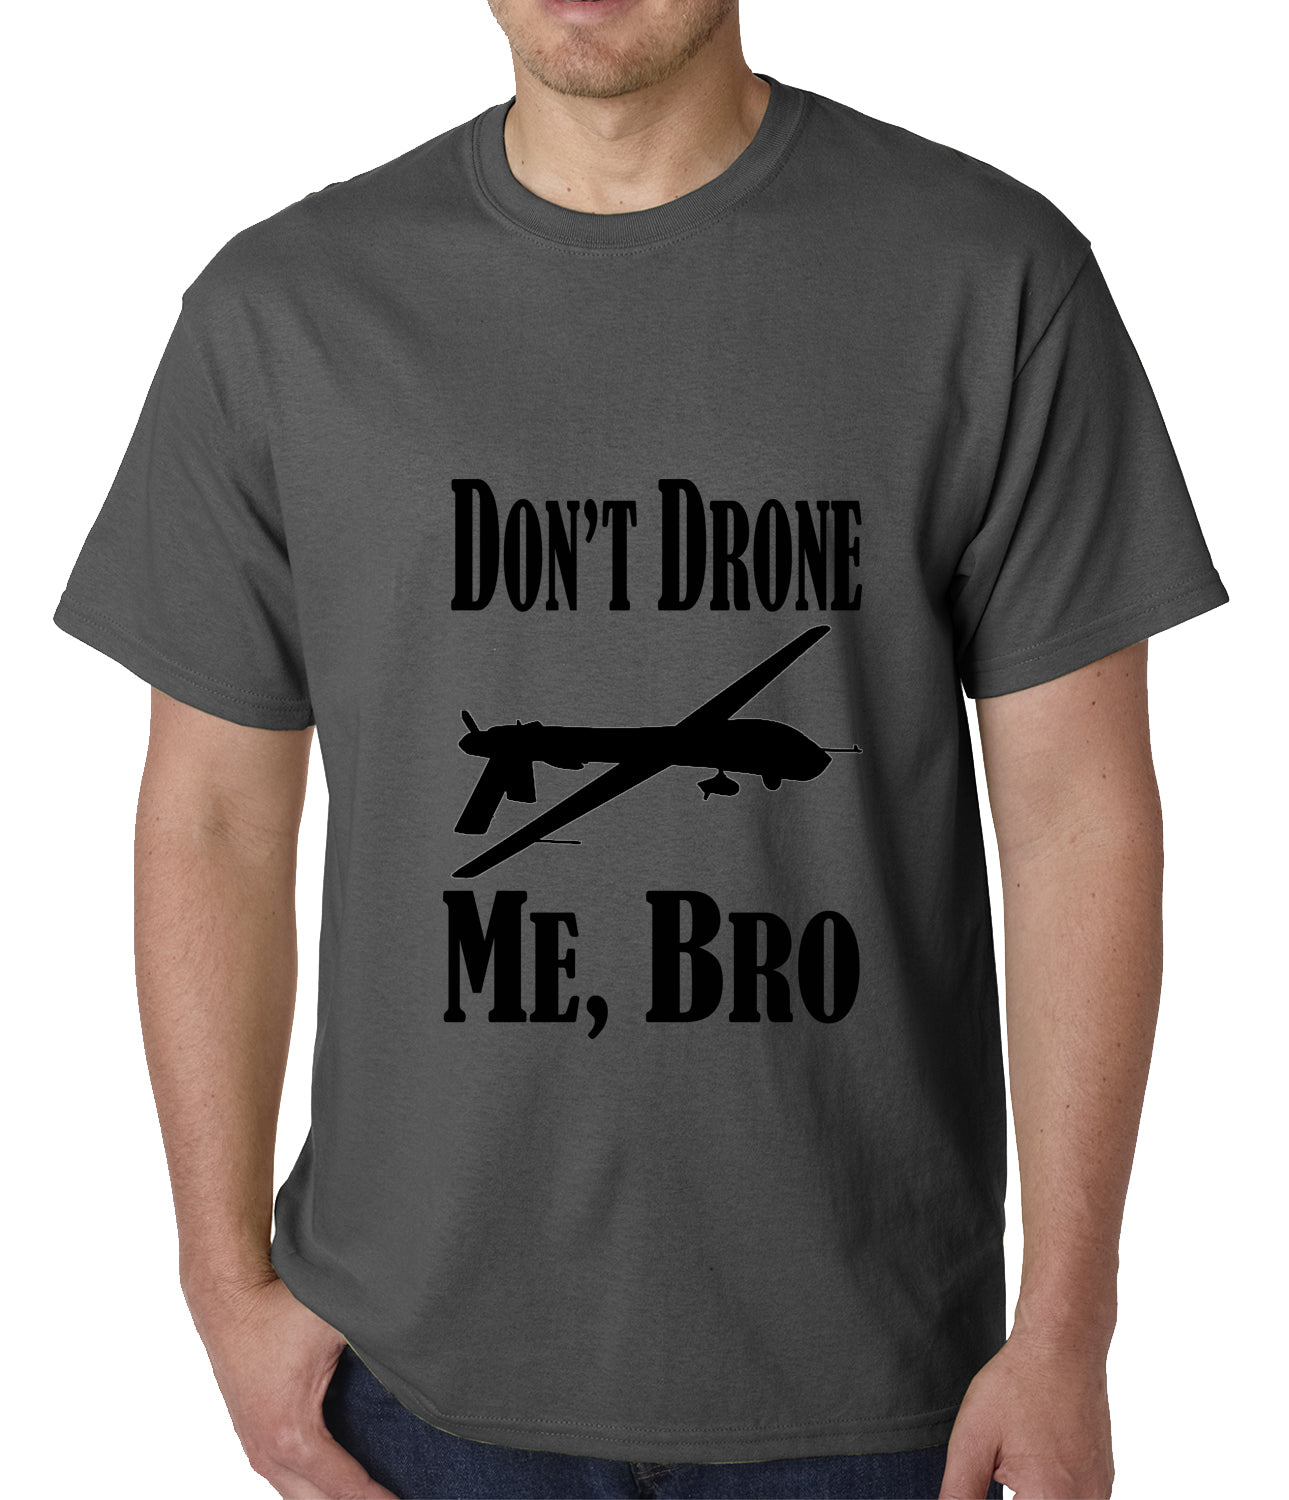 Don't Drone Me, Bro Mens T-shirt